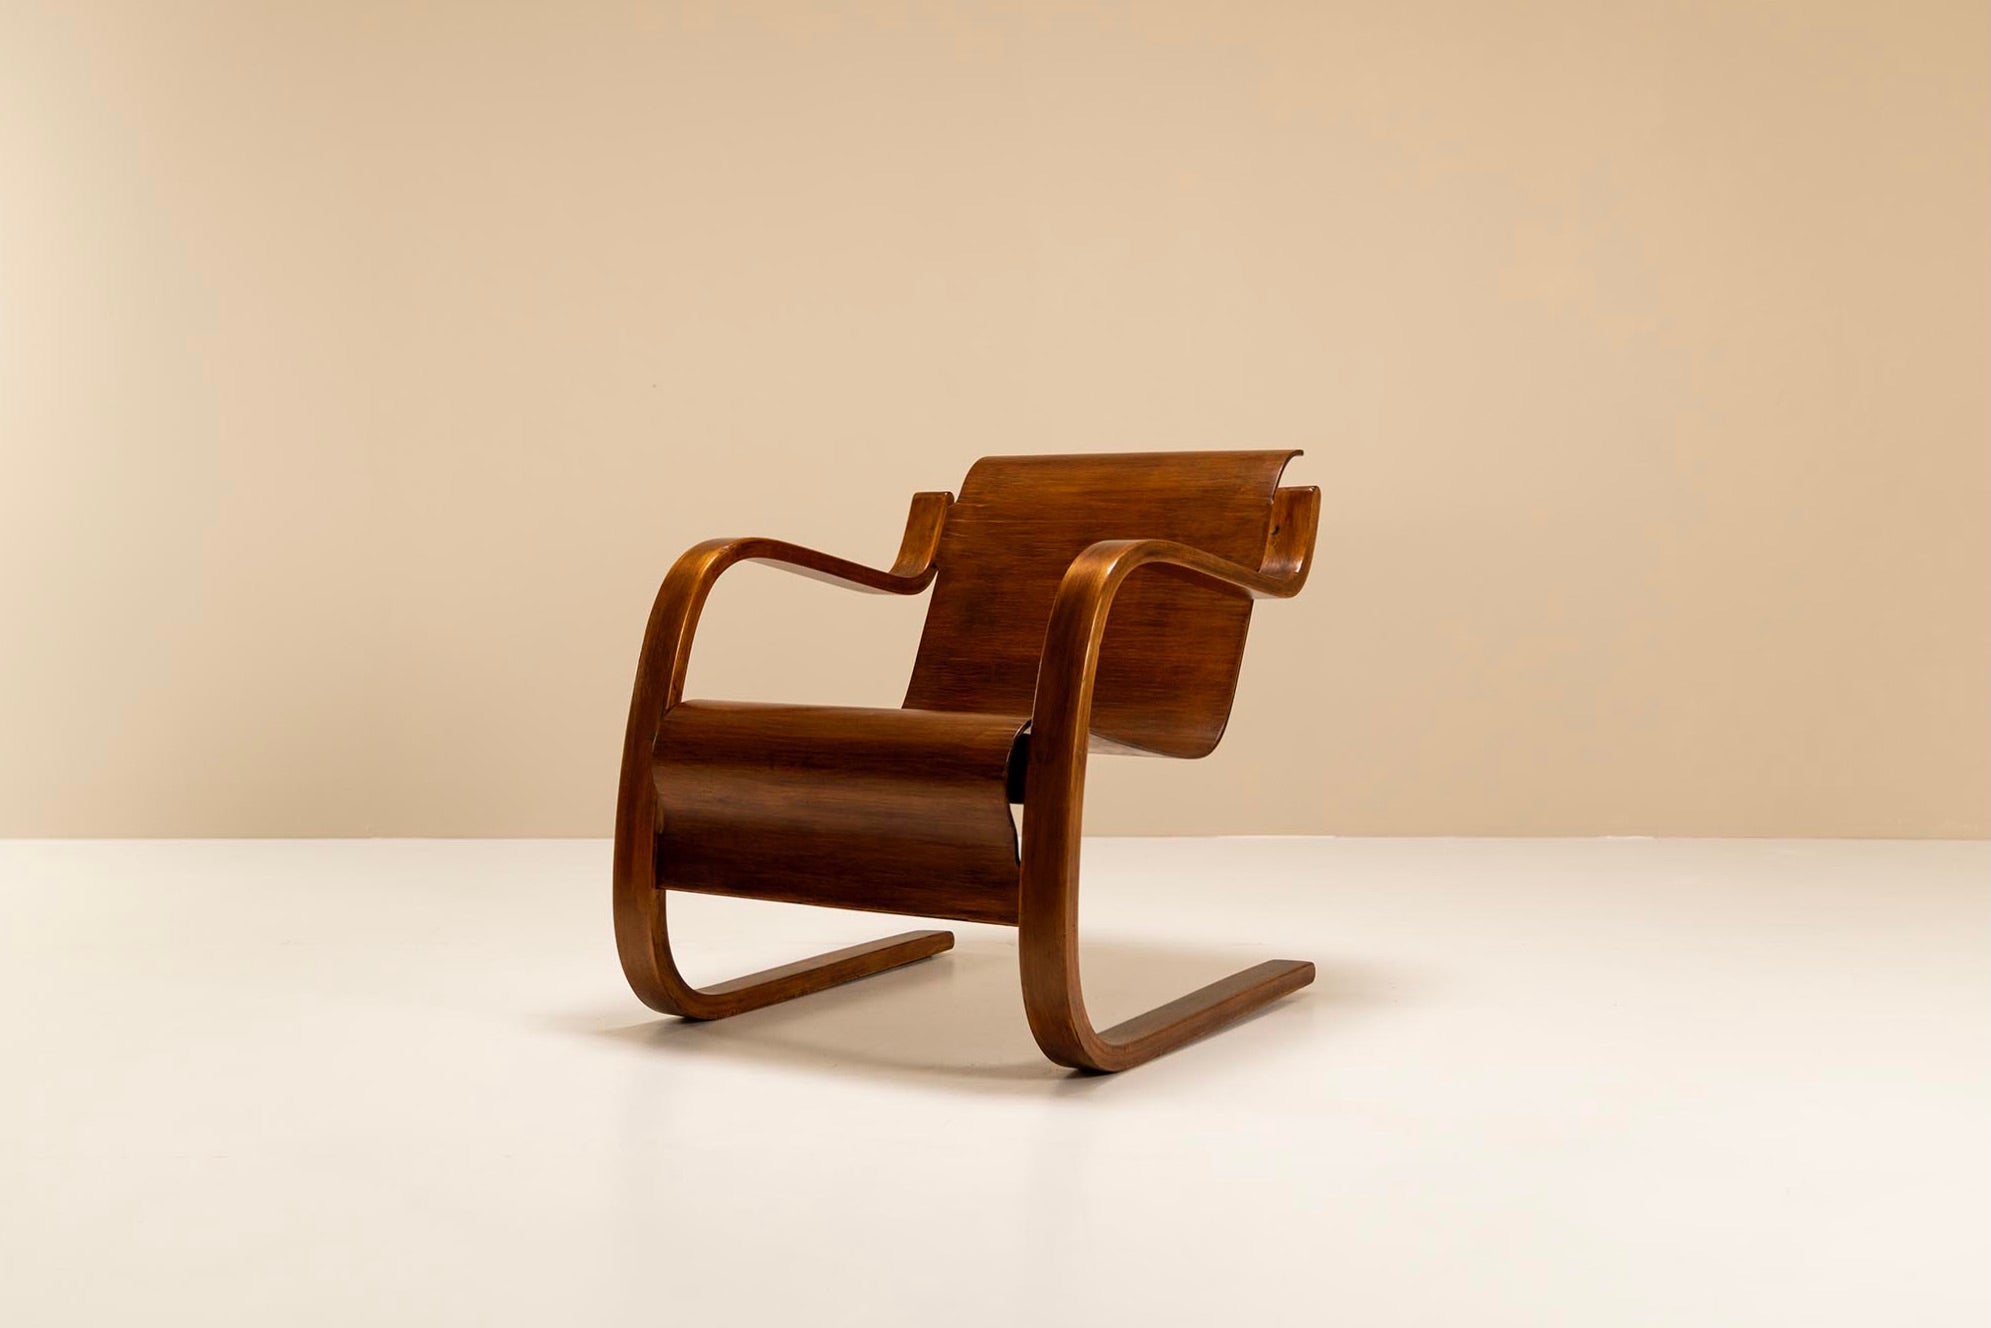 Alvar Aalto Lounge Chair in Birch Plywood Model 31/41, 1935 Finland